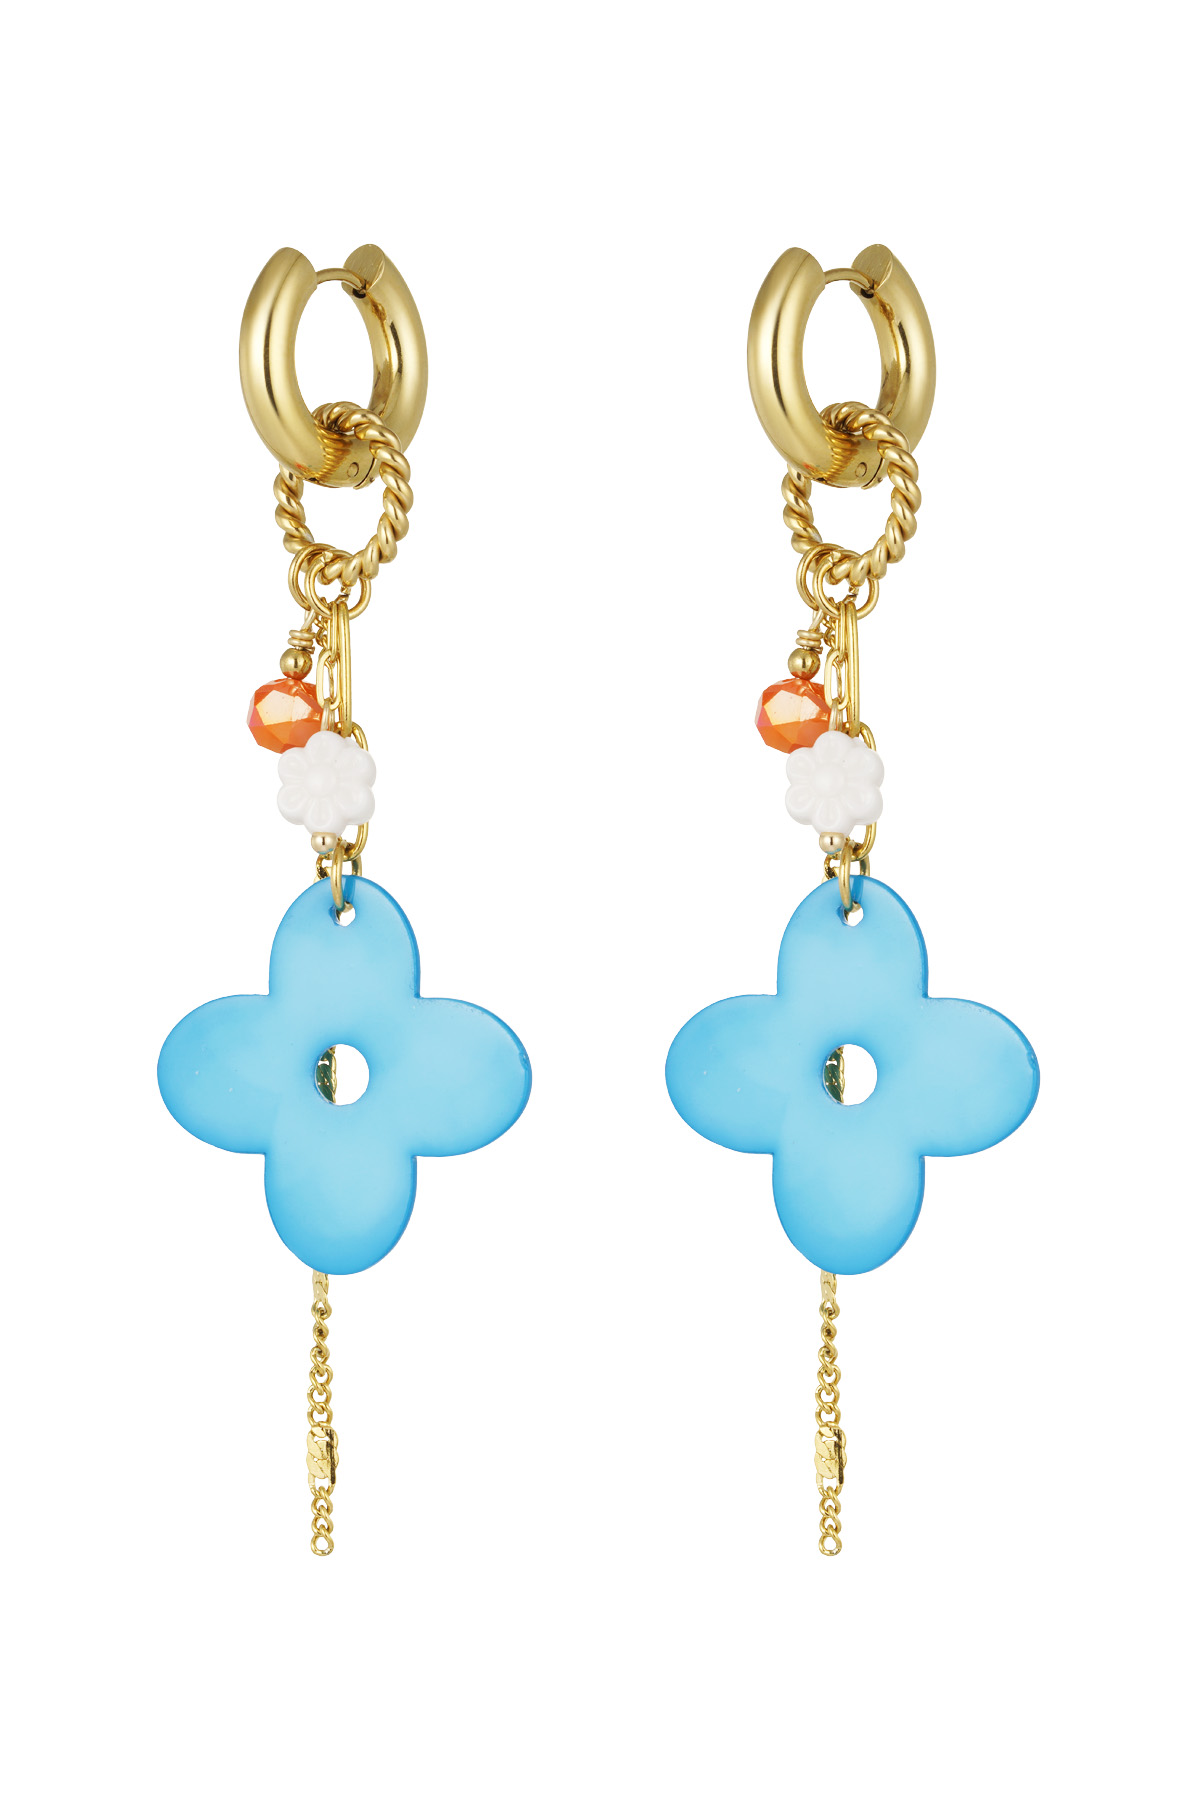 Flower power earrings - blue h5 